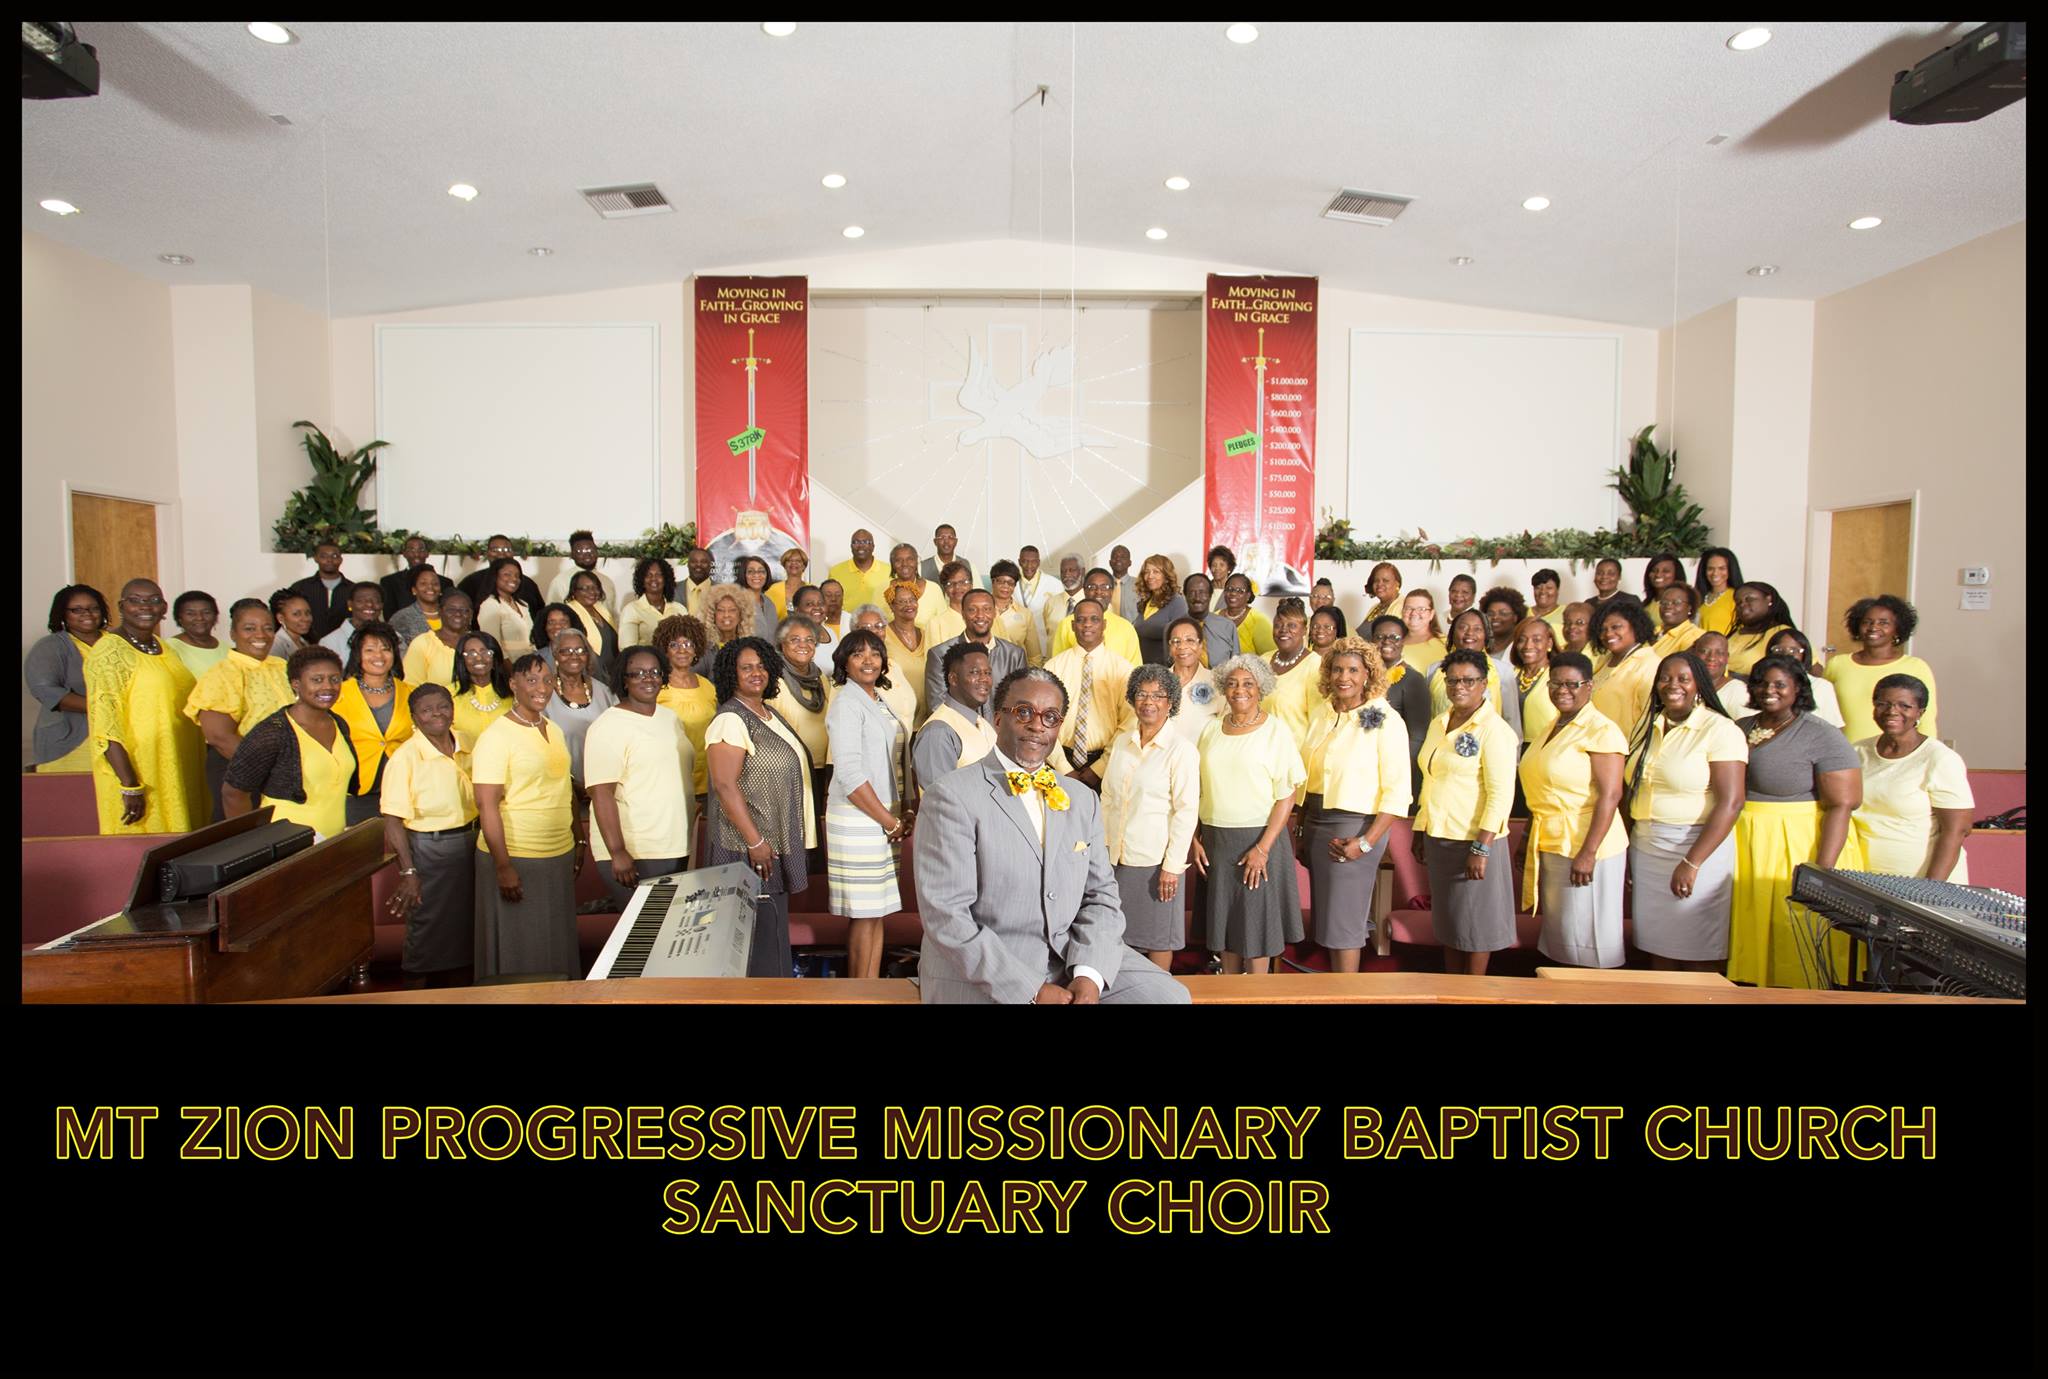 Sanctuary Choir